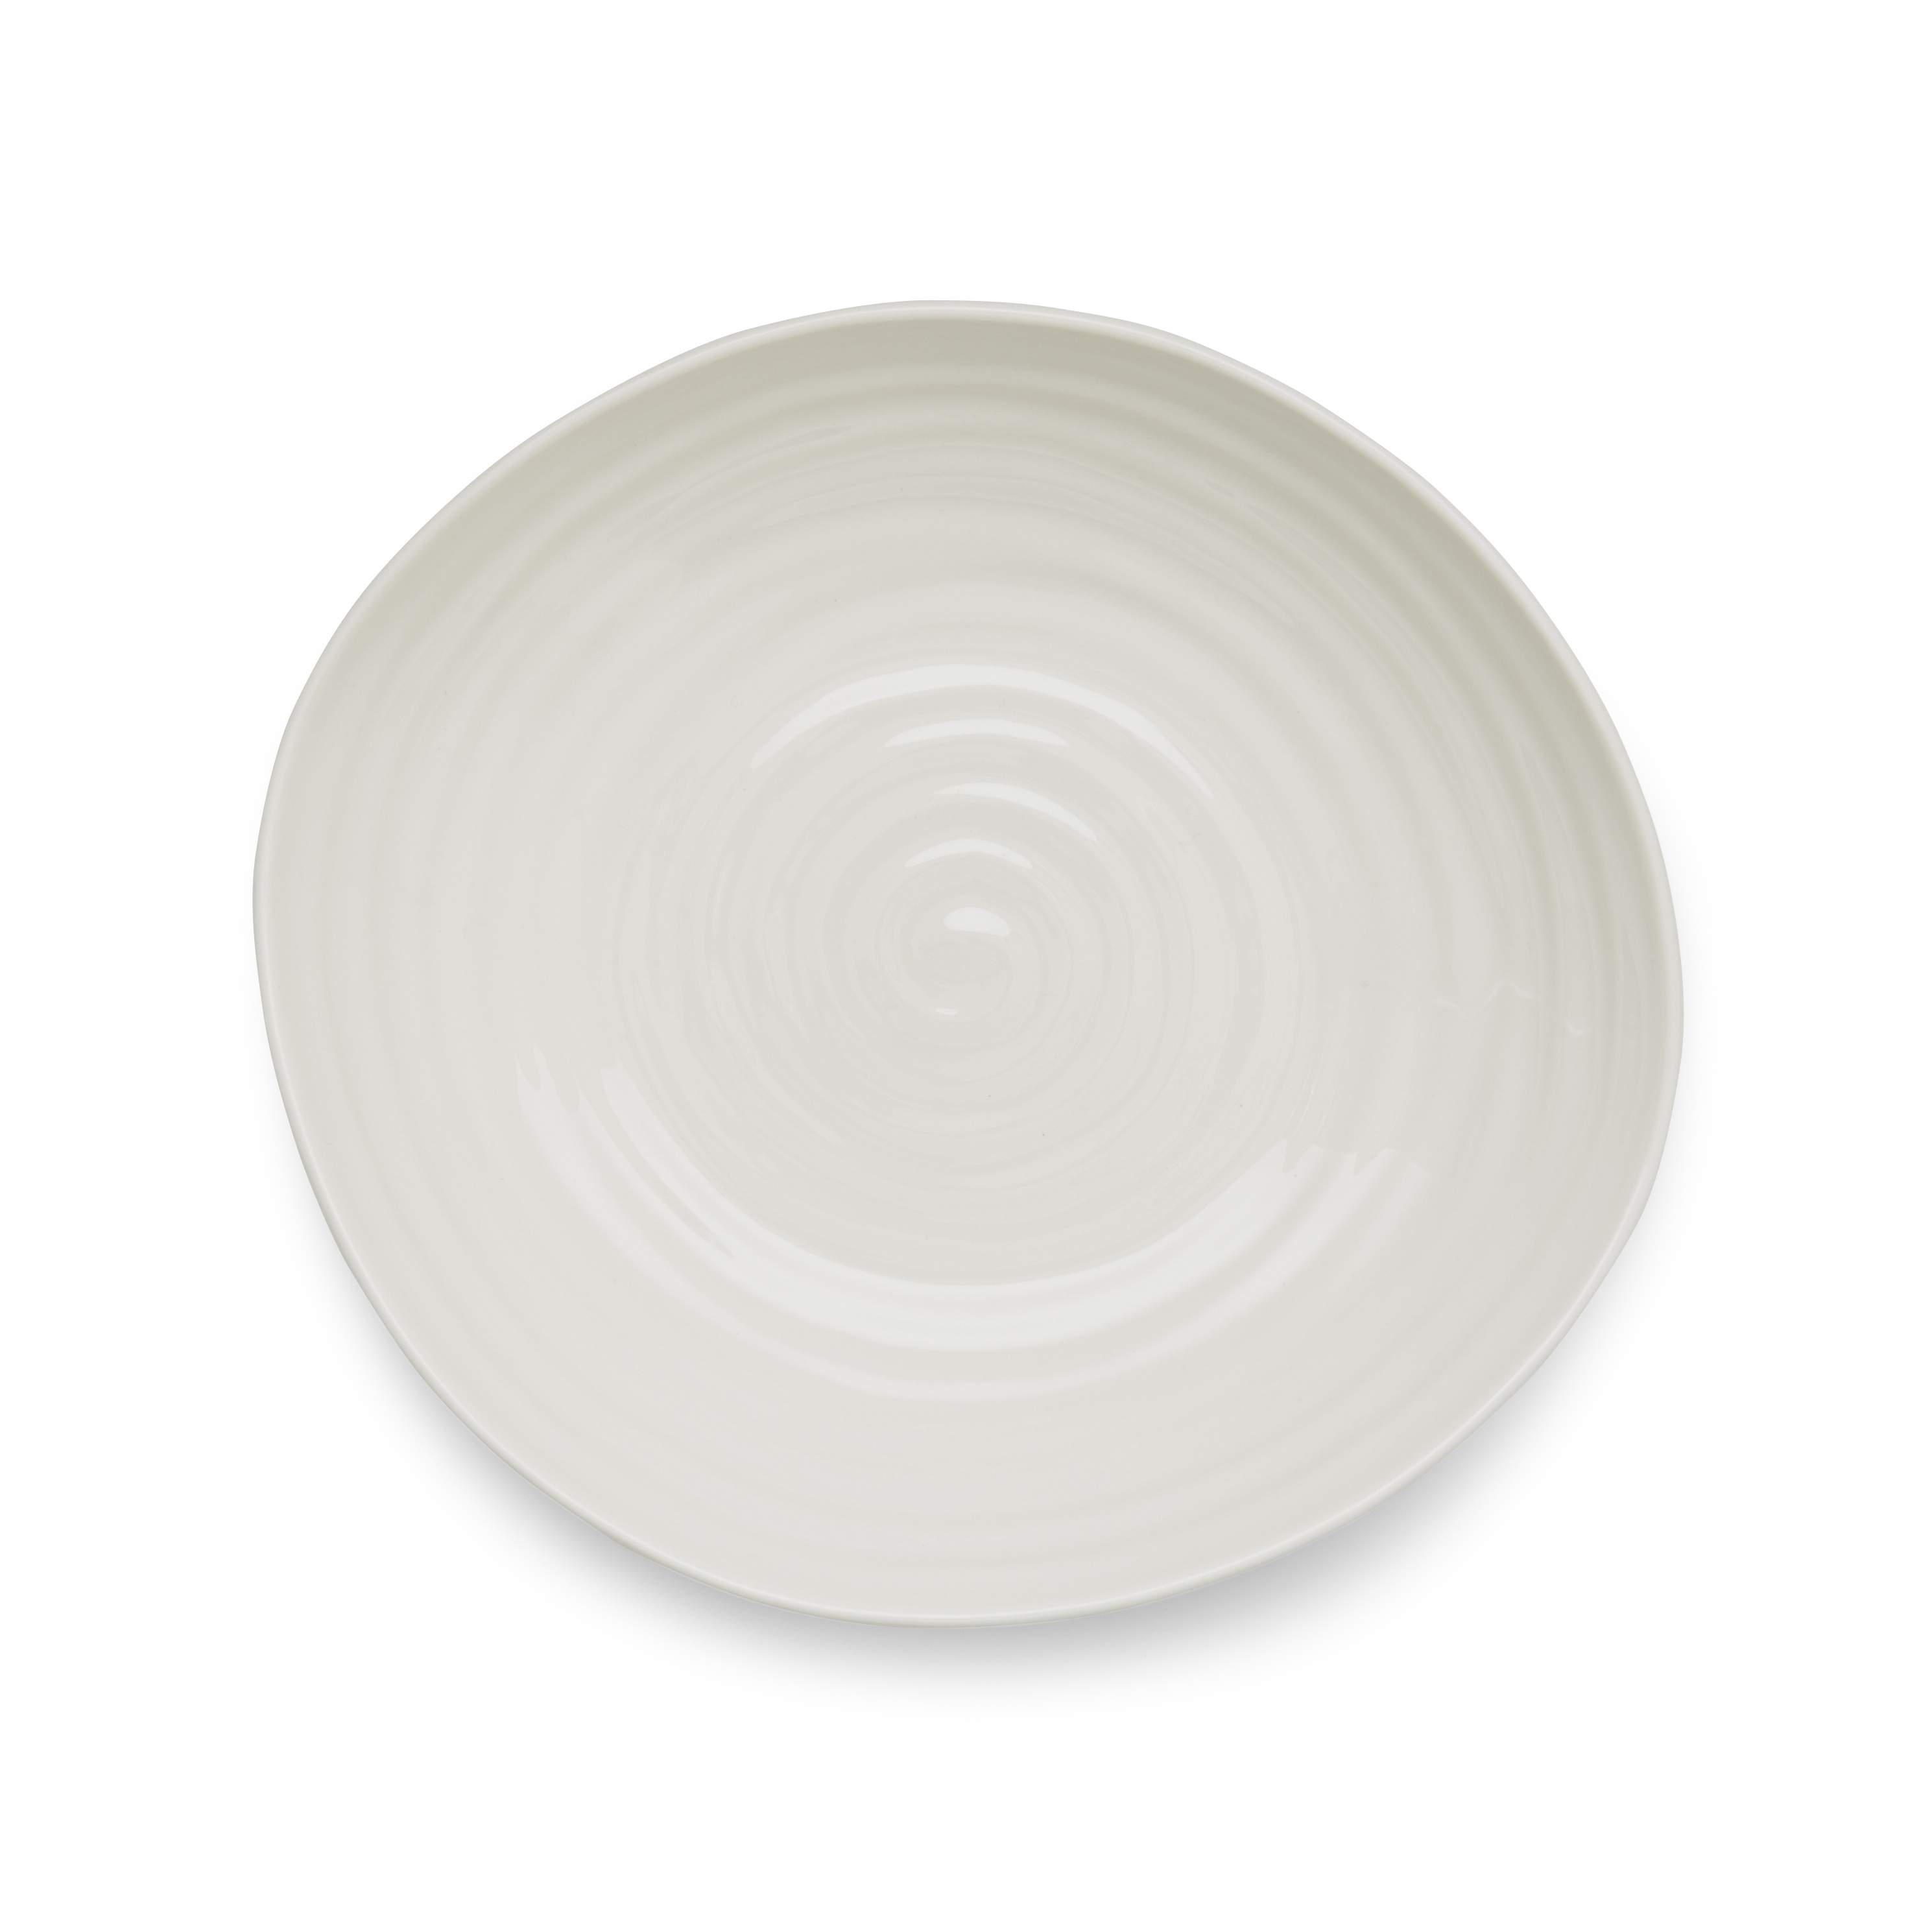 Sophie Conran White Pasta Bowls Set of 4 image number null